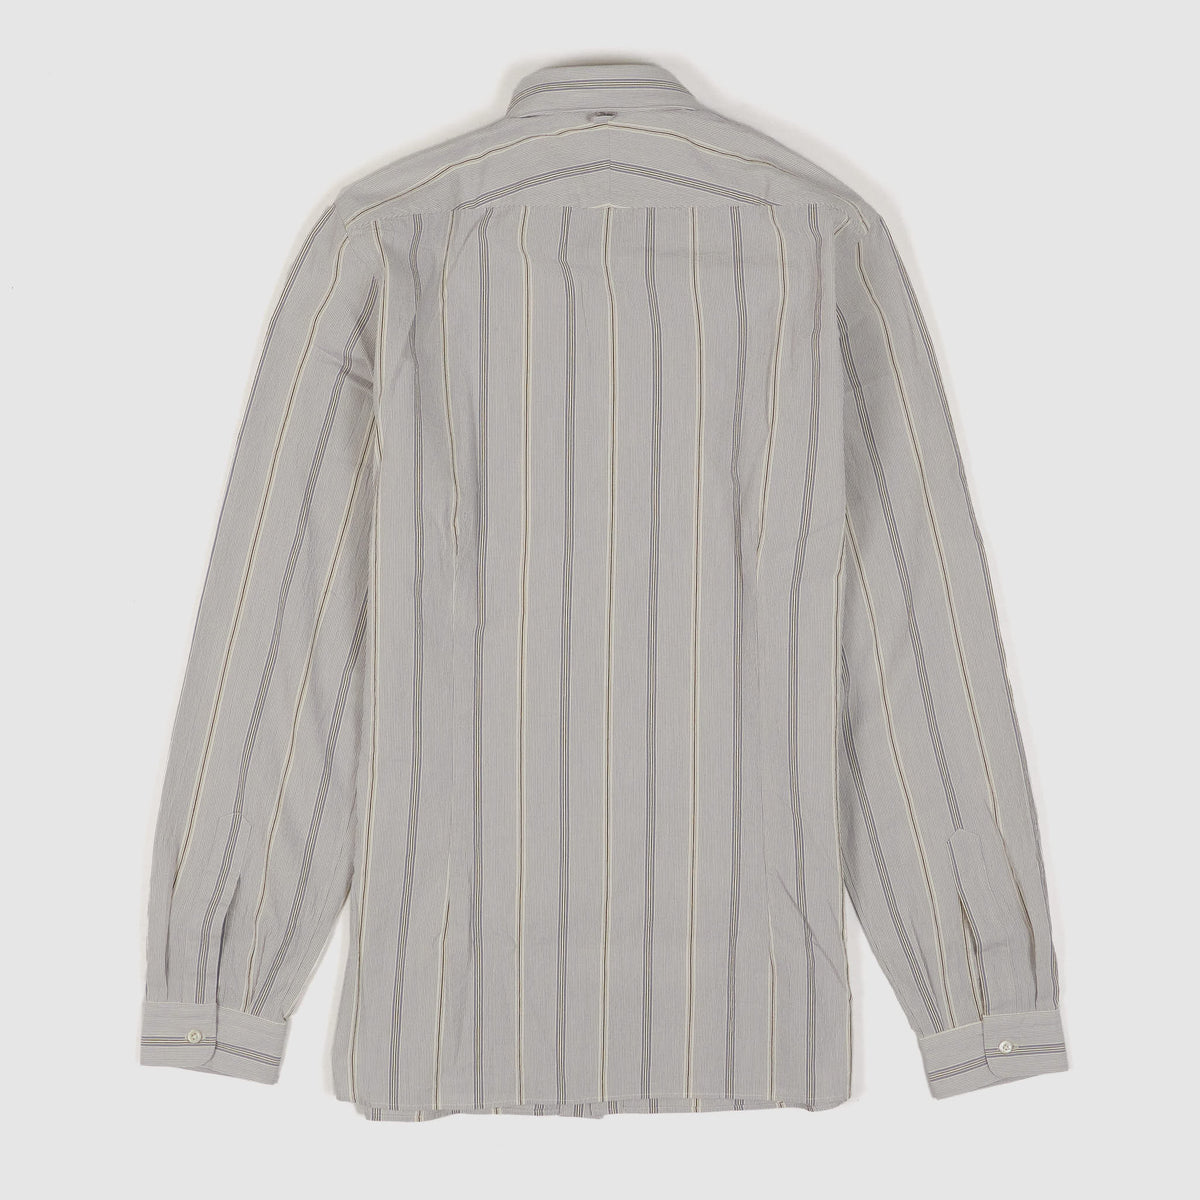 A.B.C.L Long Sleeve Woven Striped Cotton Shirt